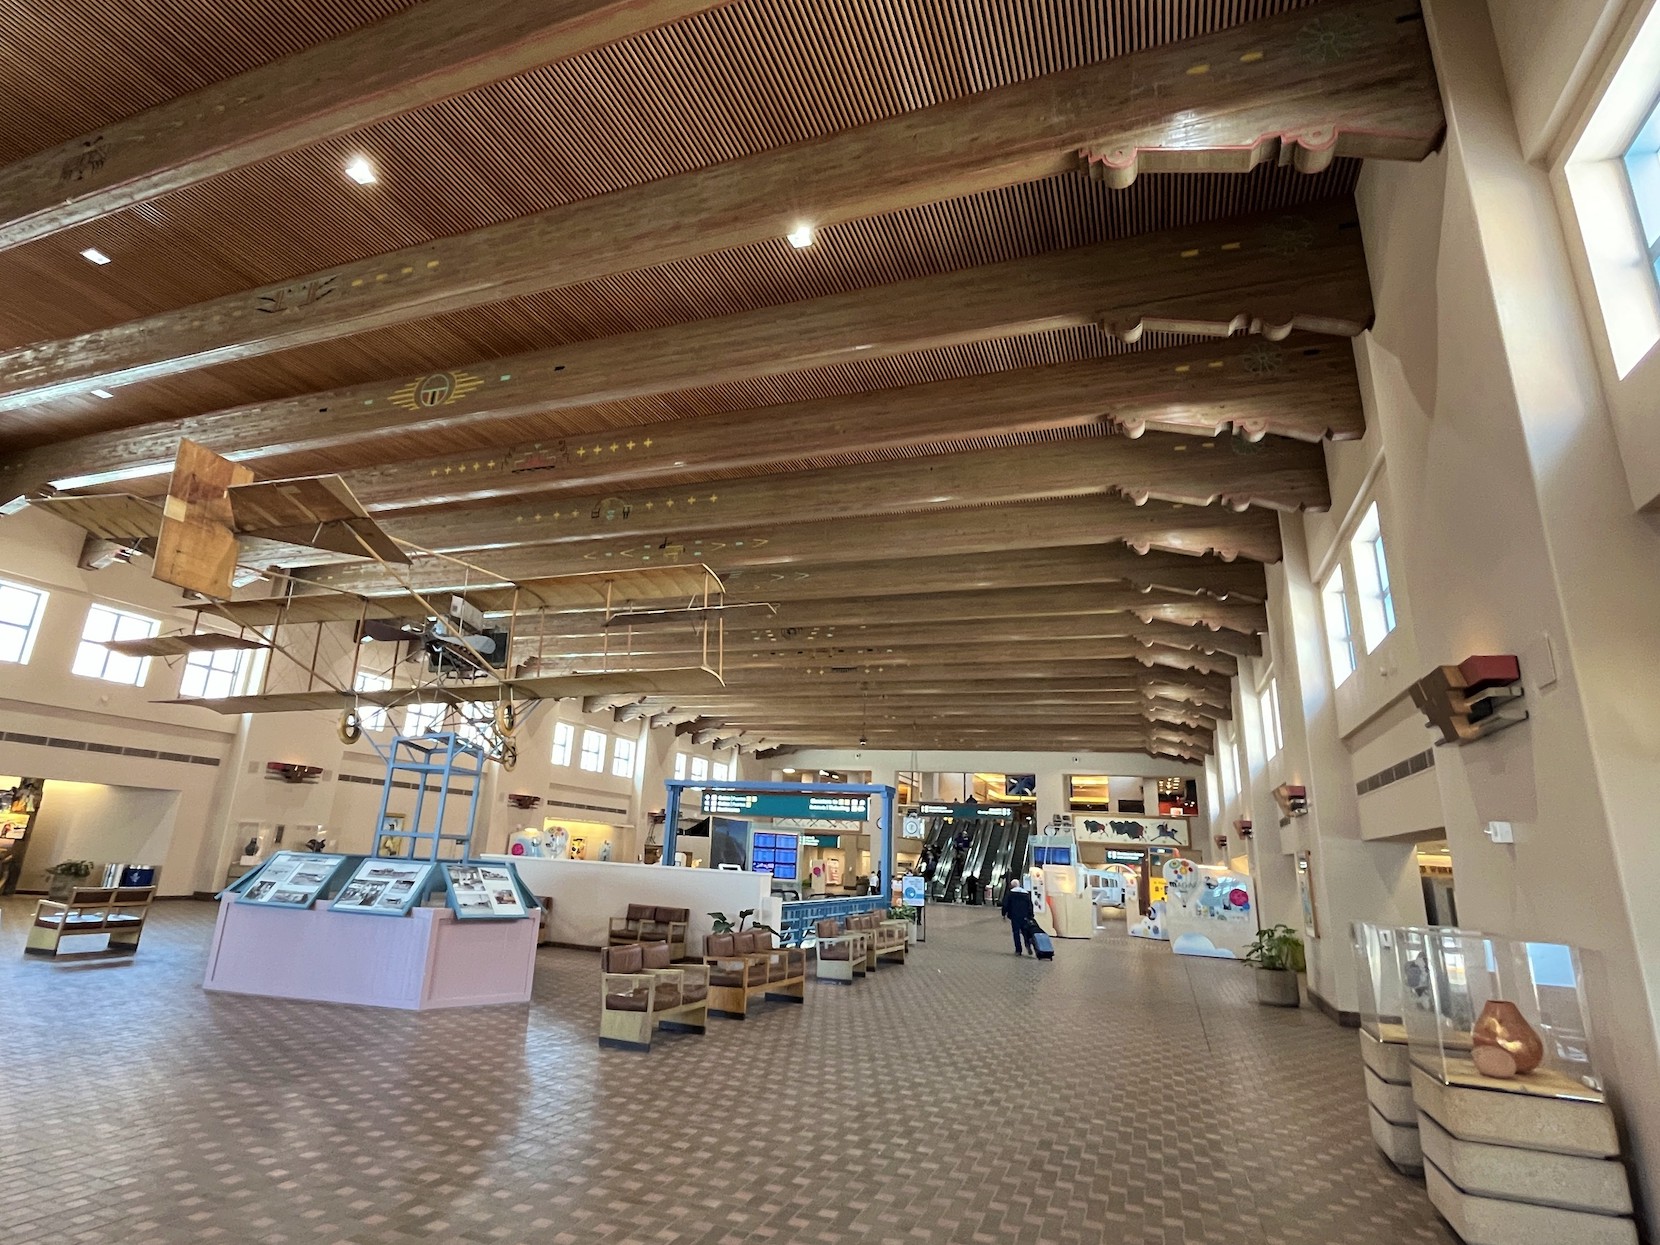 ABQ terminal interior, lower level.